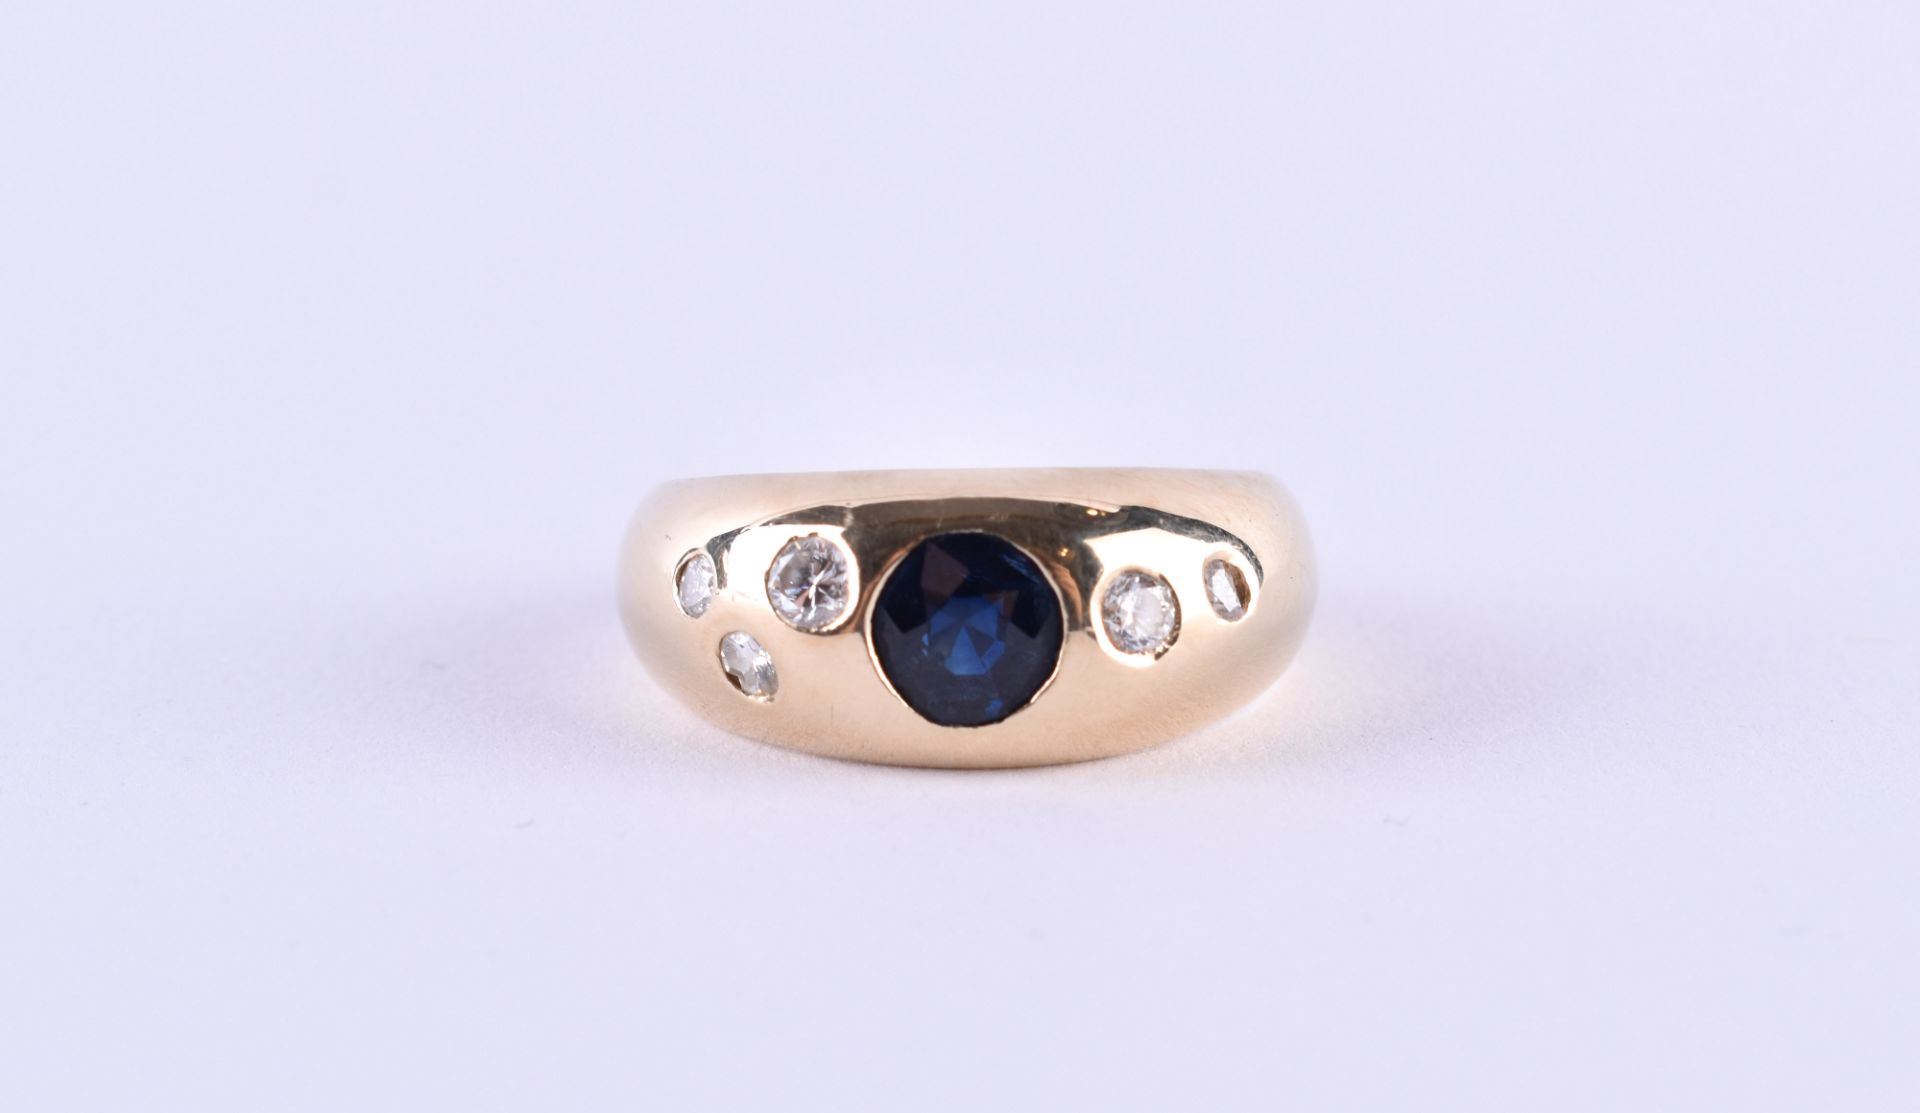 Brilliant sapphire ring